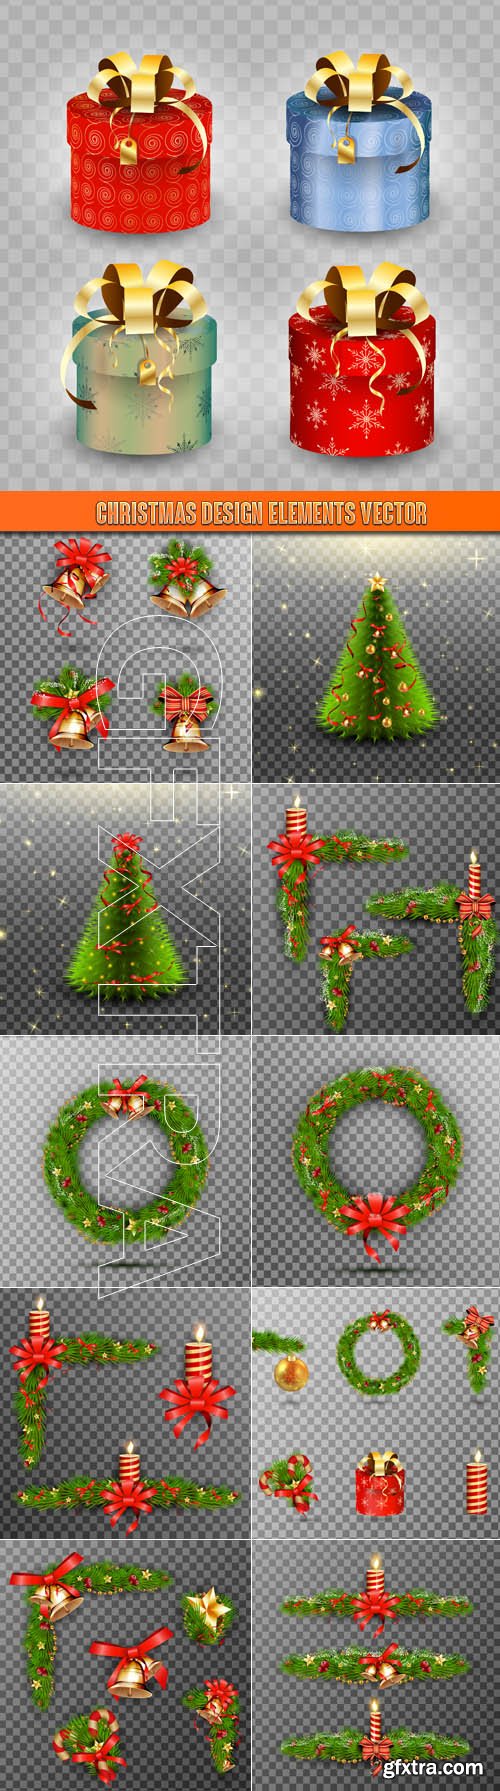 Christmas design elements vector